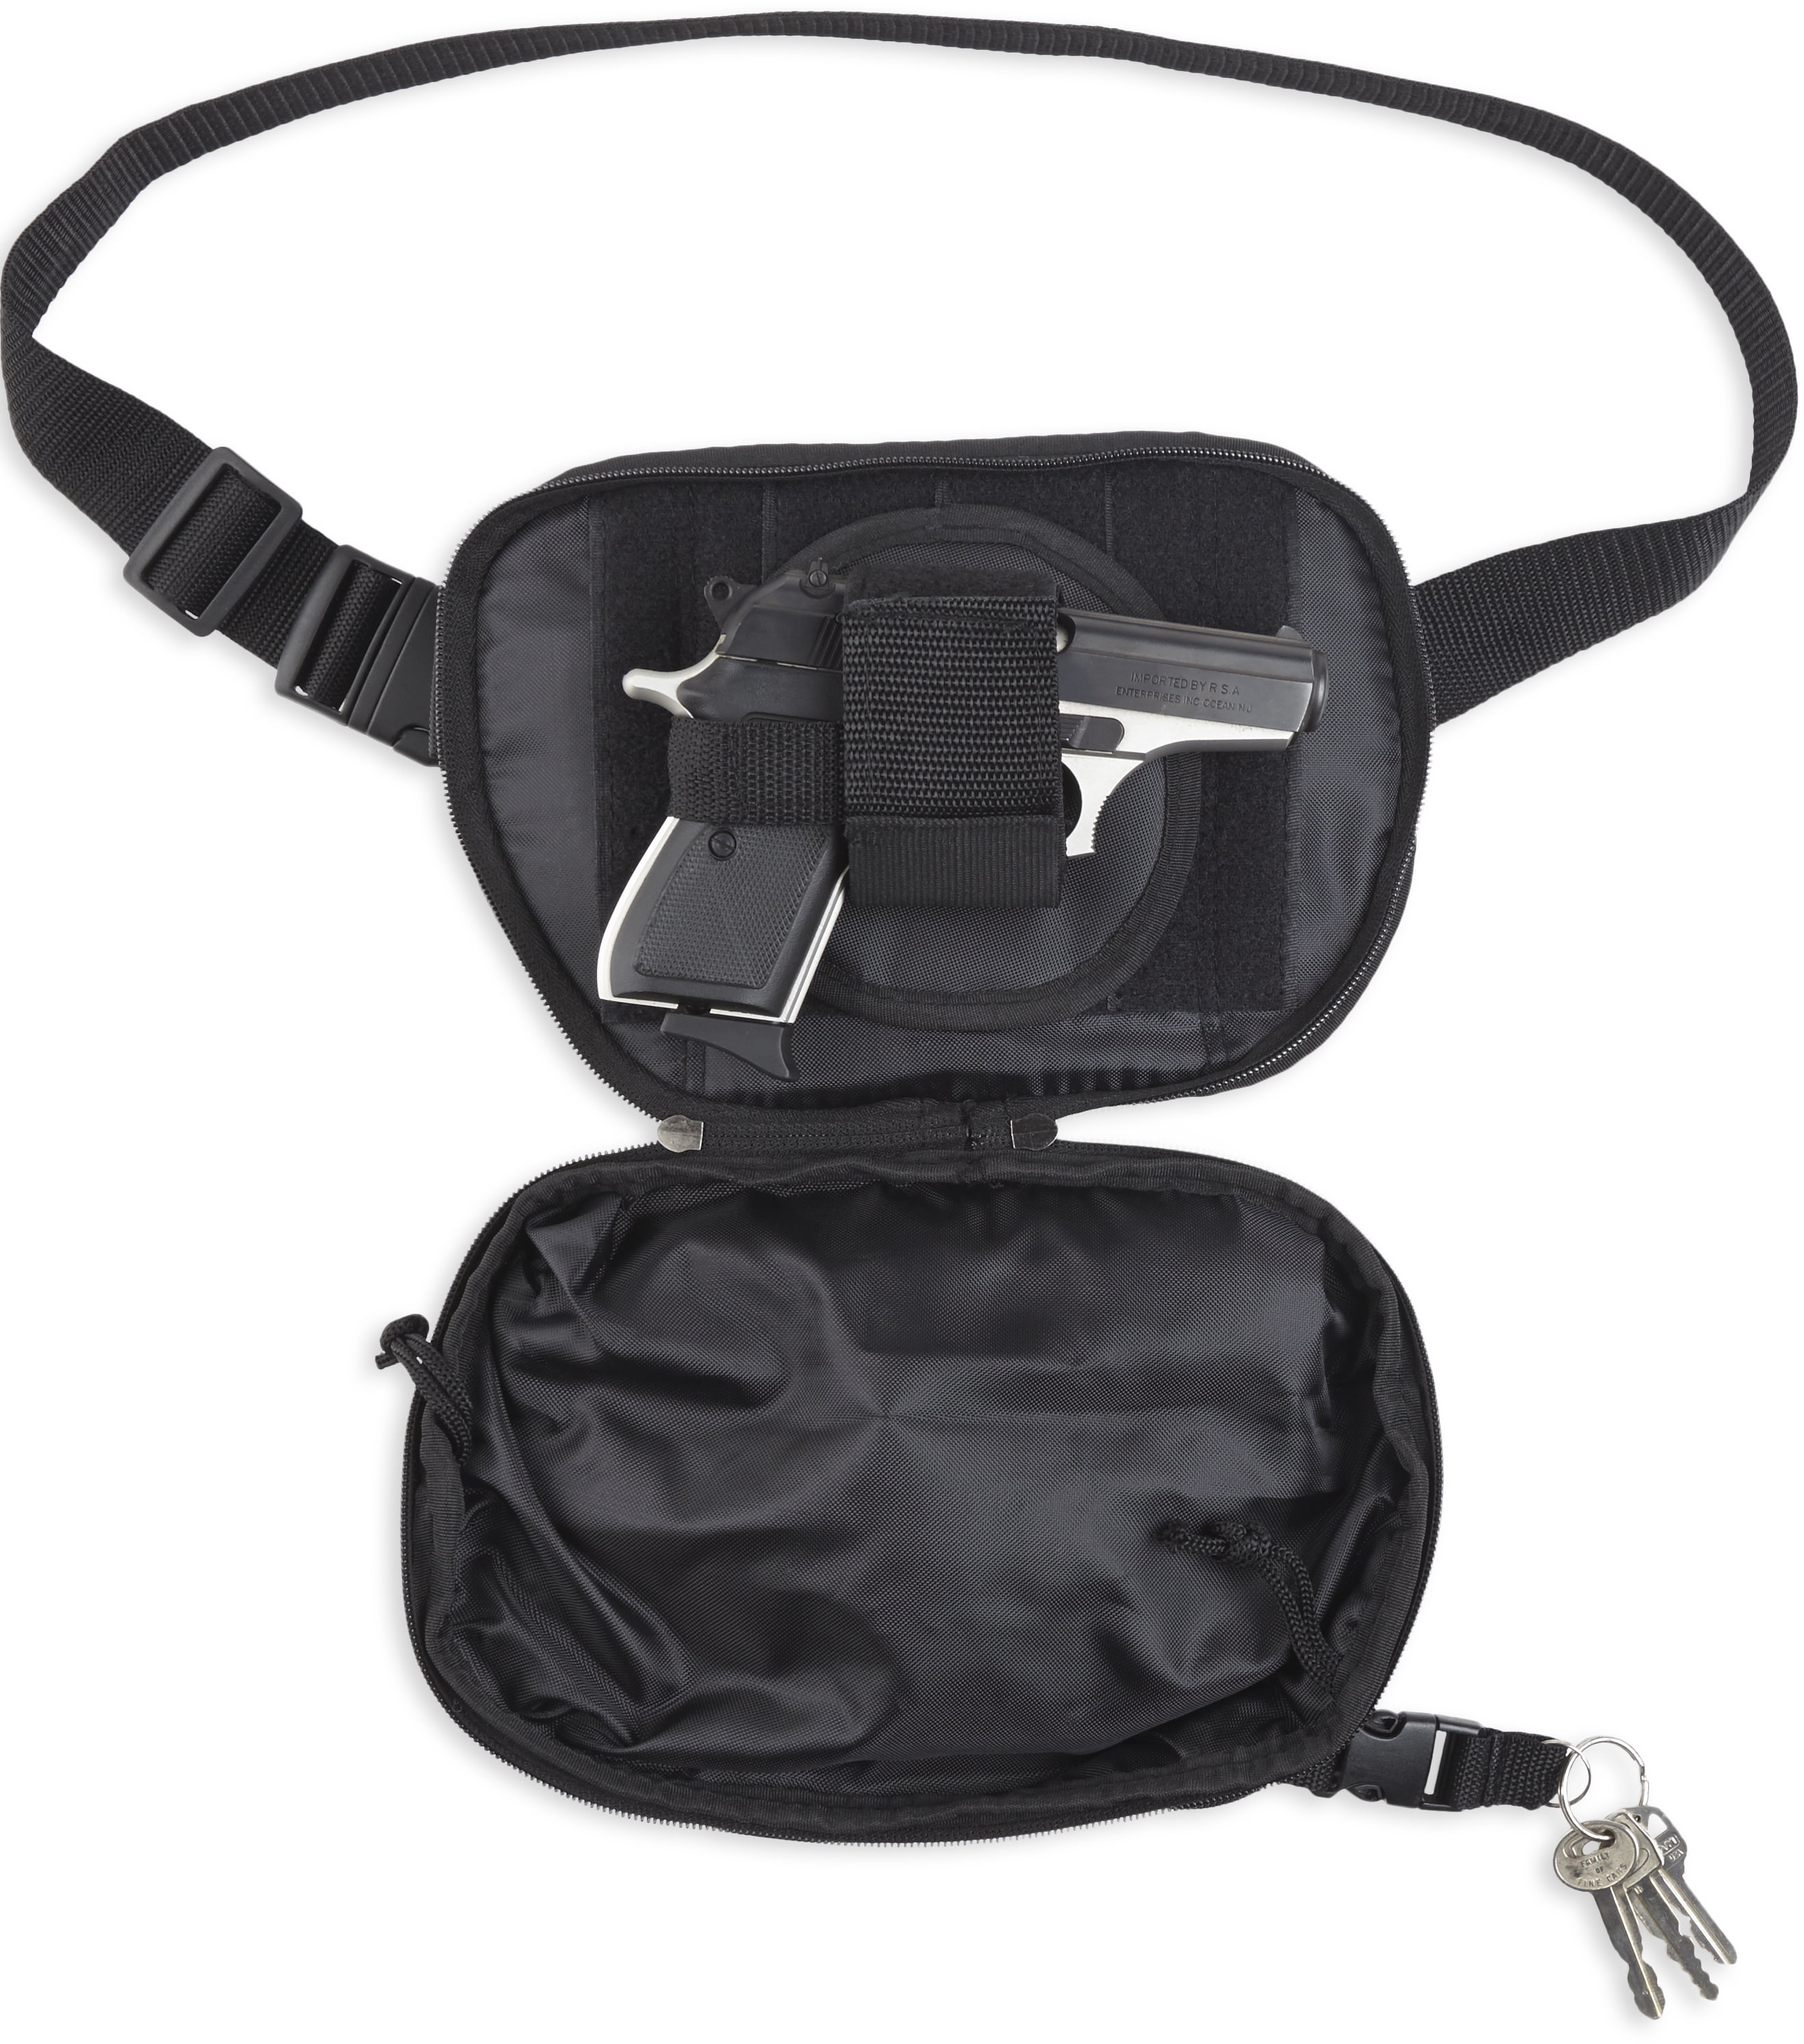 Bulldog Cases Conceal Carry mens urban Satchel w/ Holster Black bag tablet